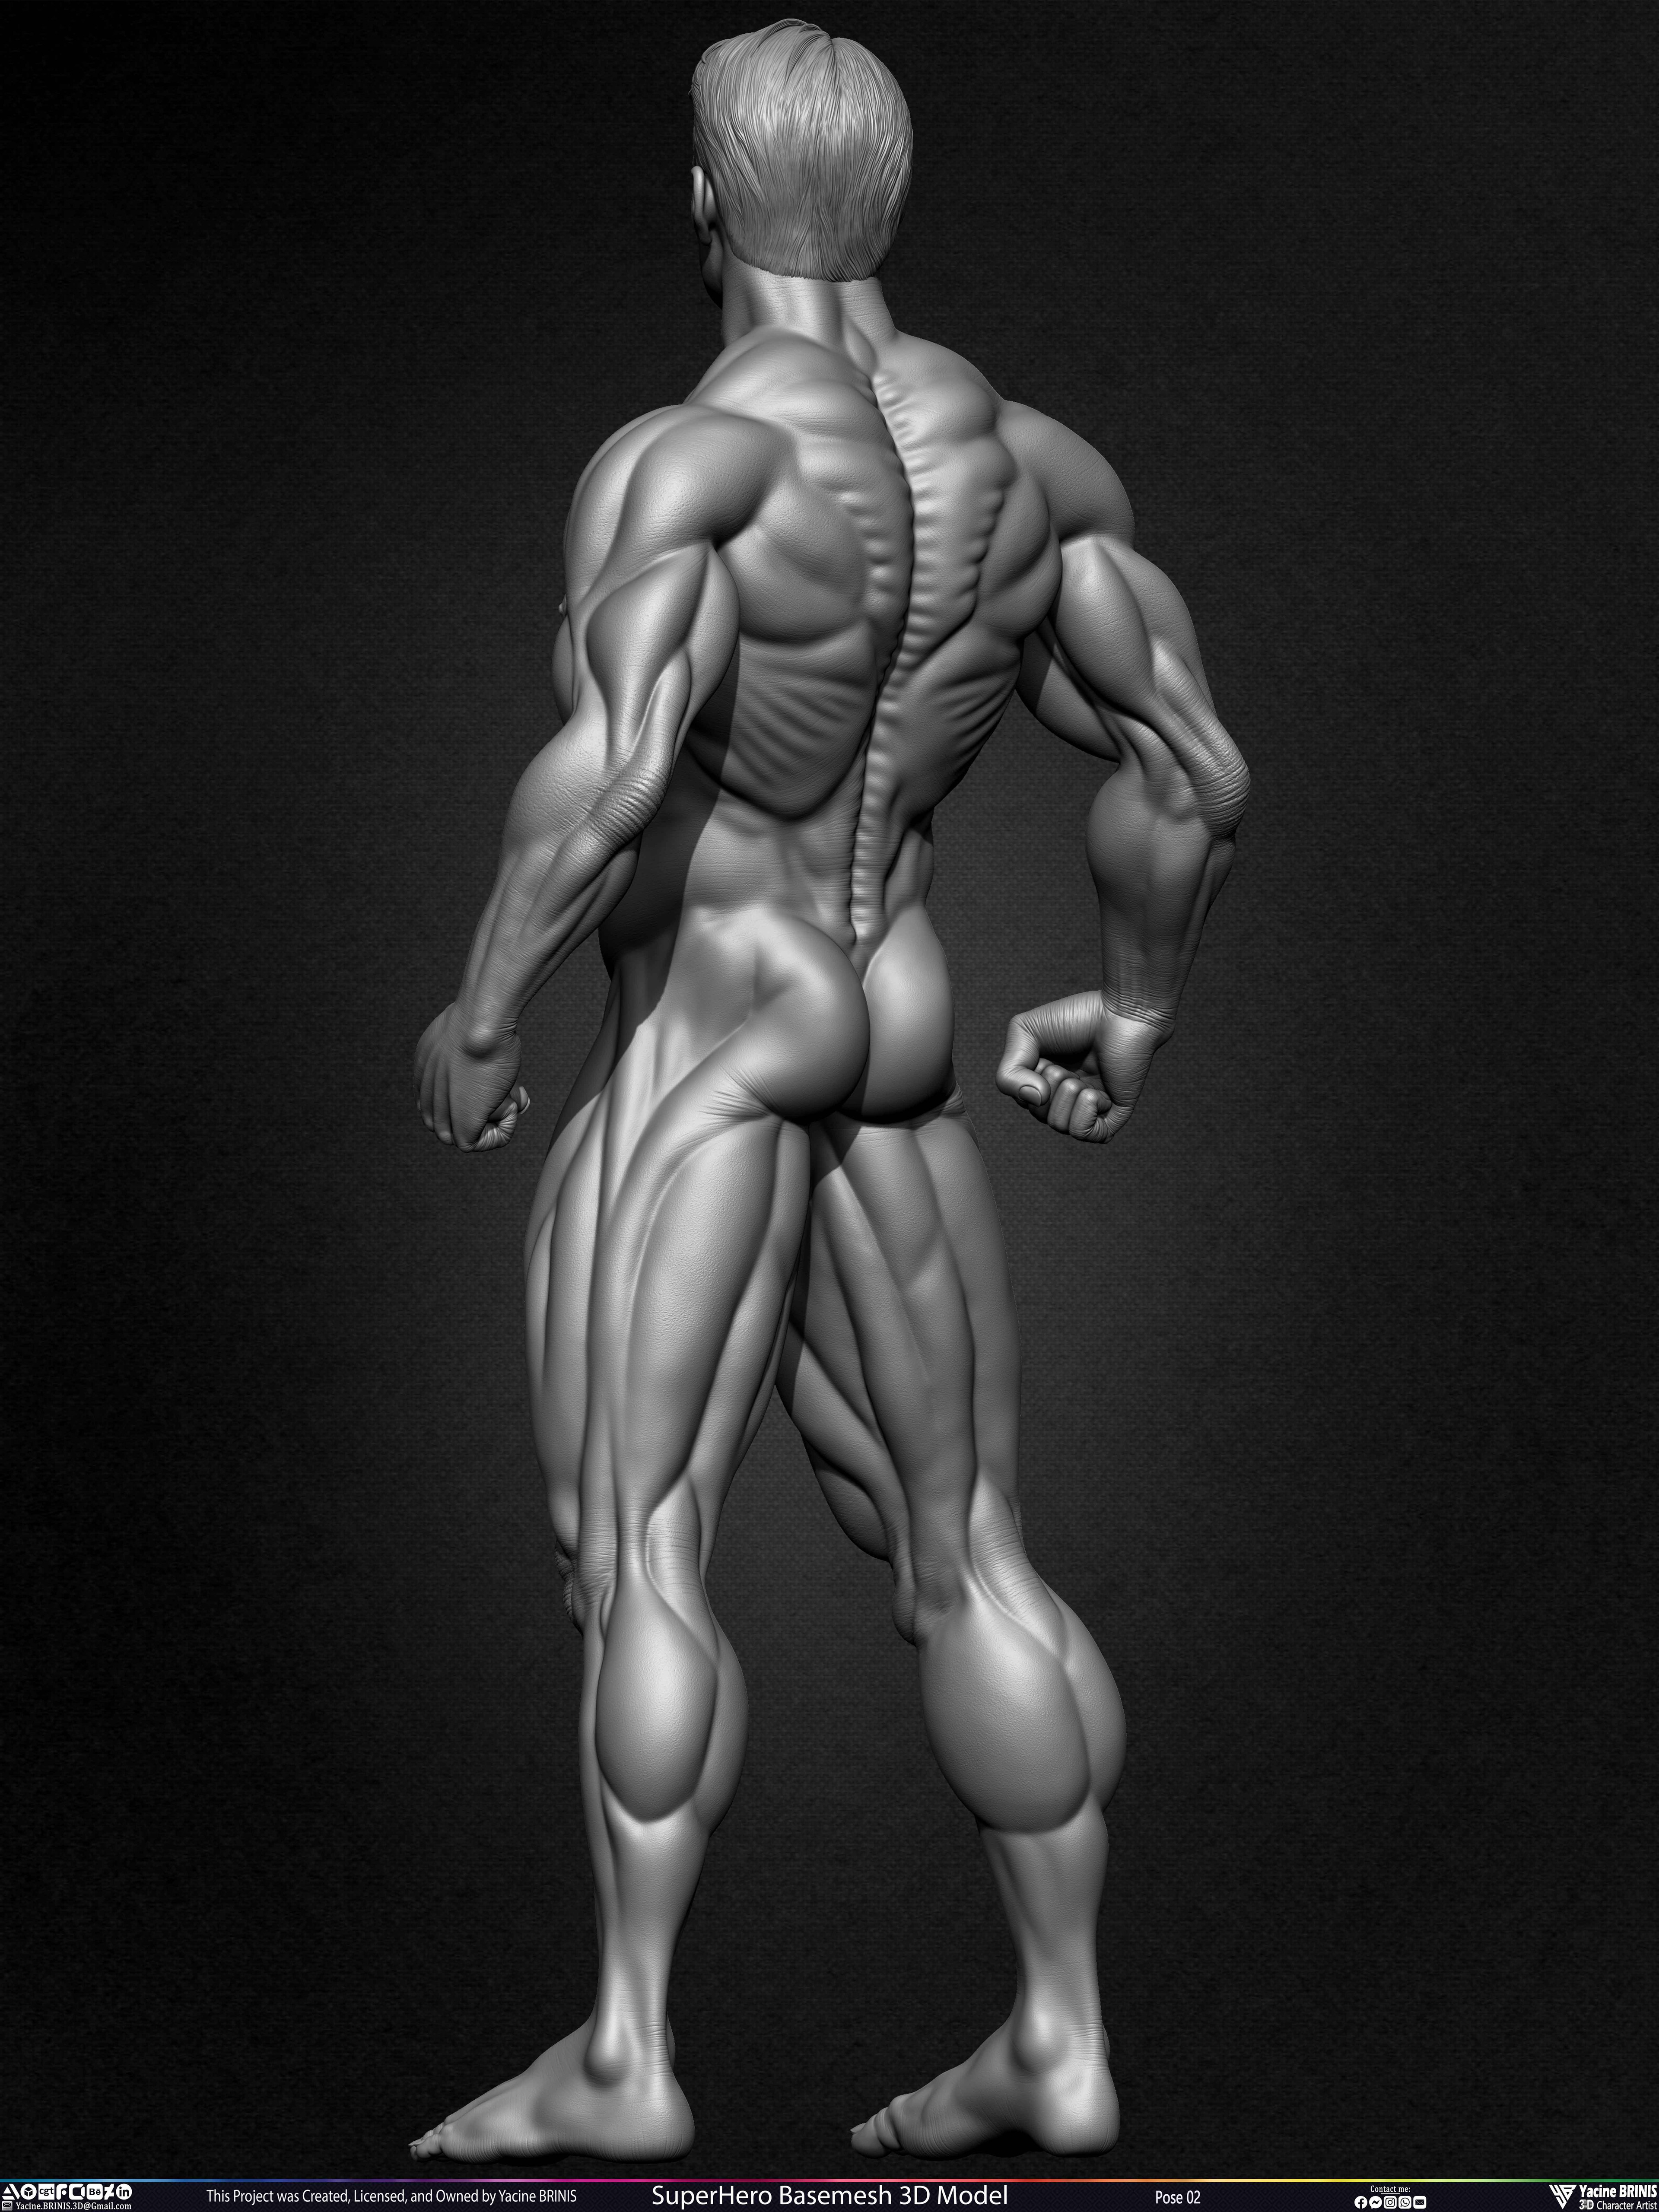 Super-Hero Basemesh 3D Model - Henry Cavill- Man of Steel - Superman - Pose 02 Sculpted by Yacine BRINIS Set 011